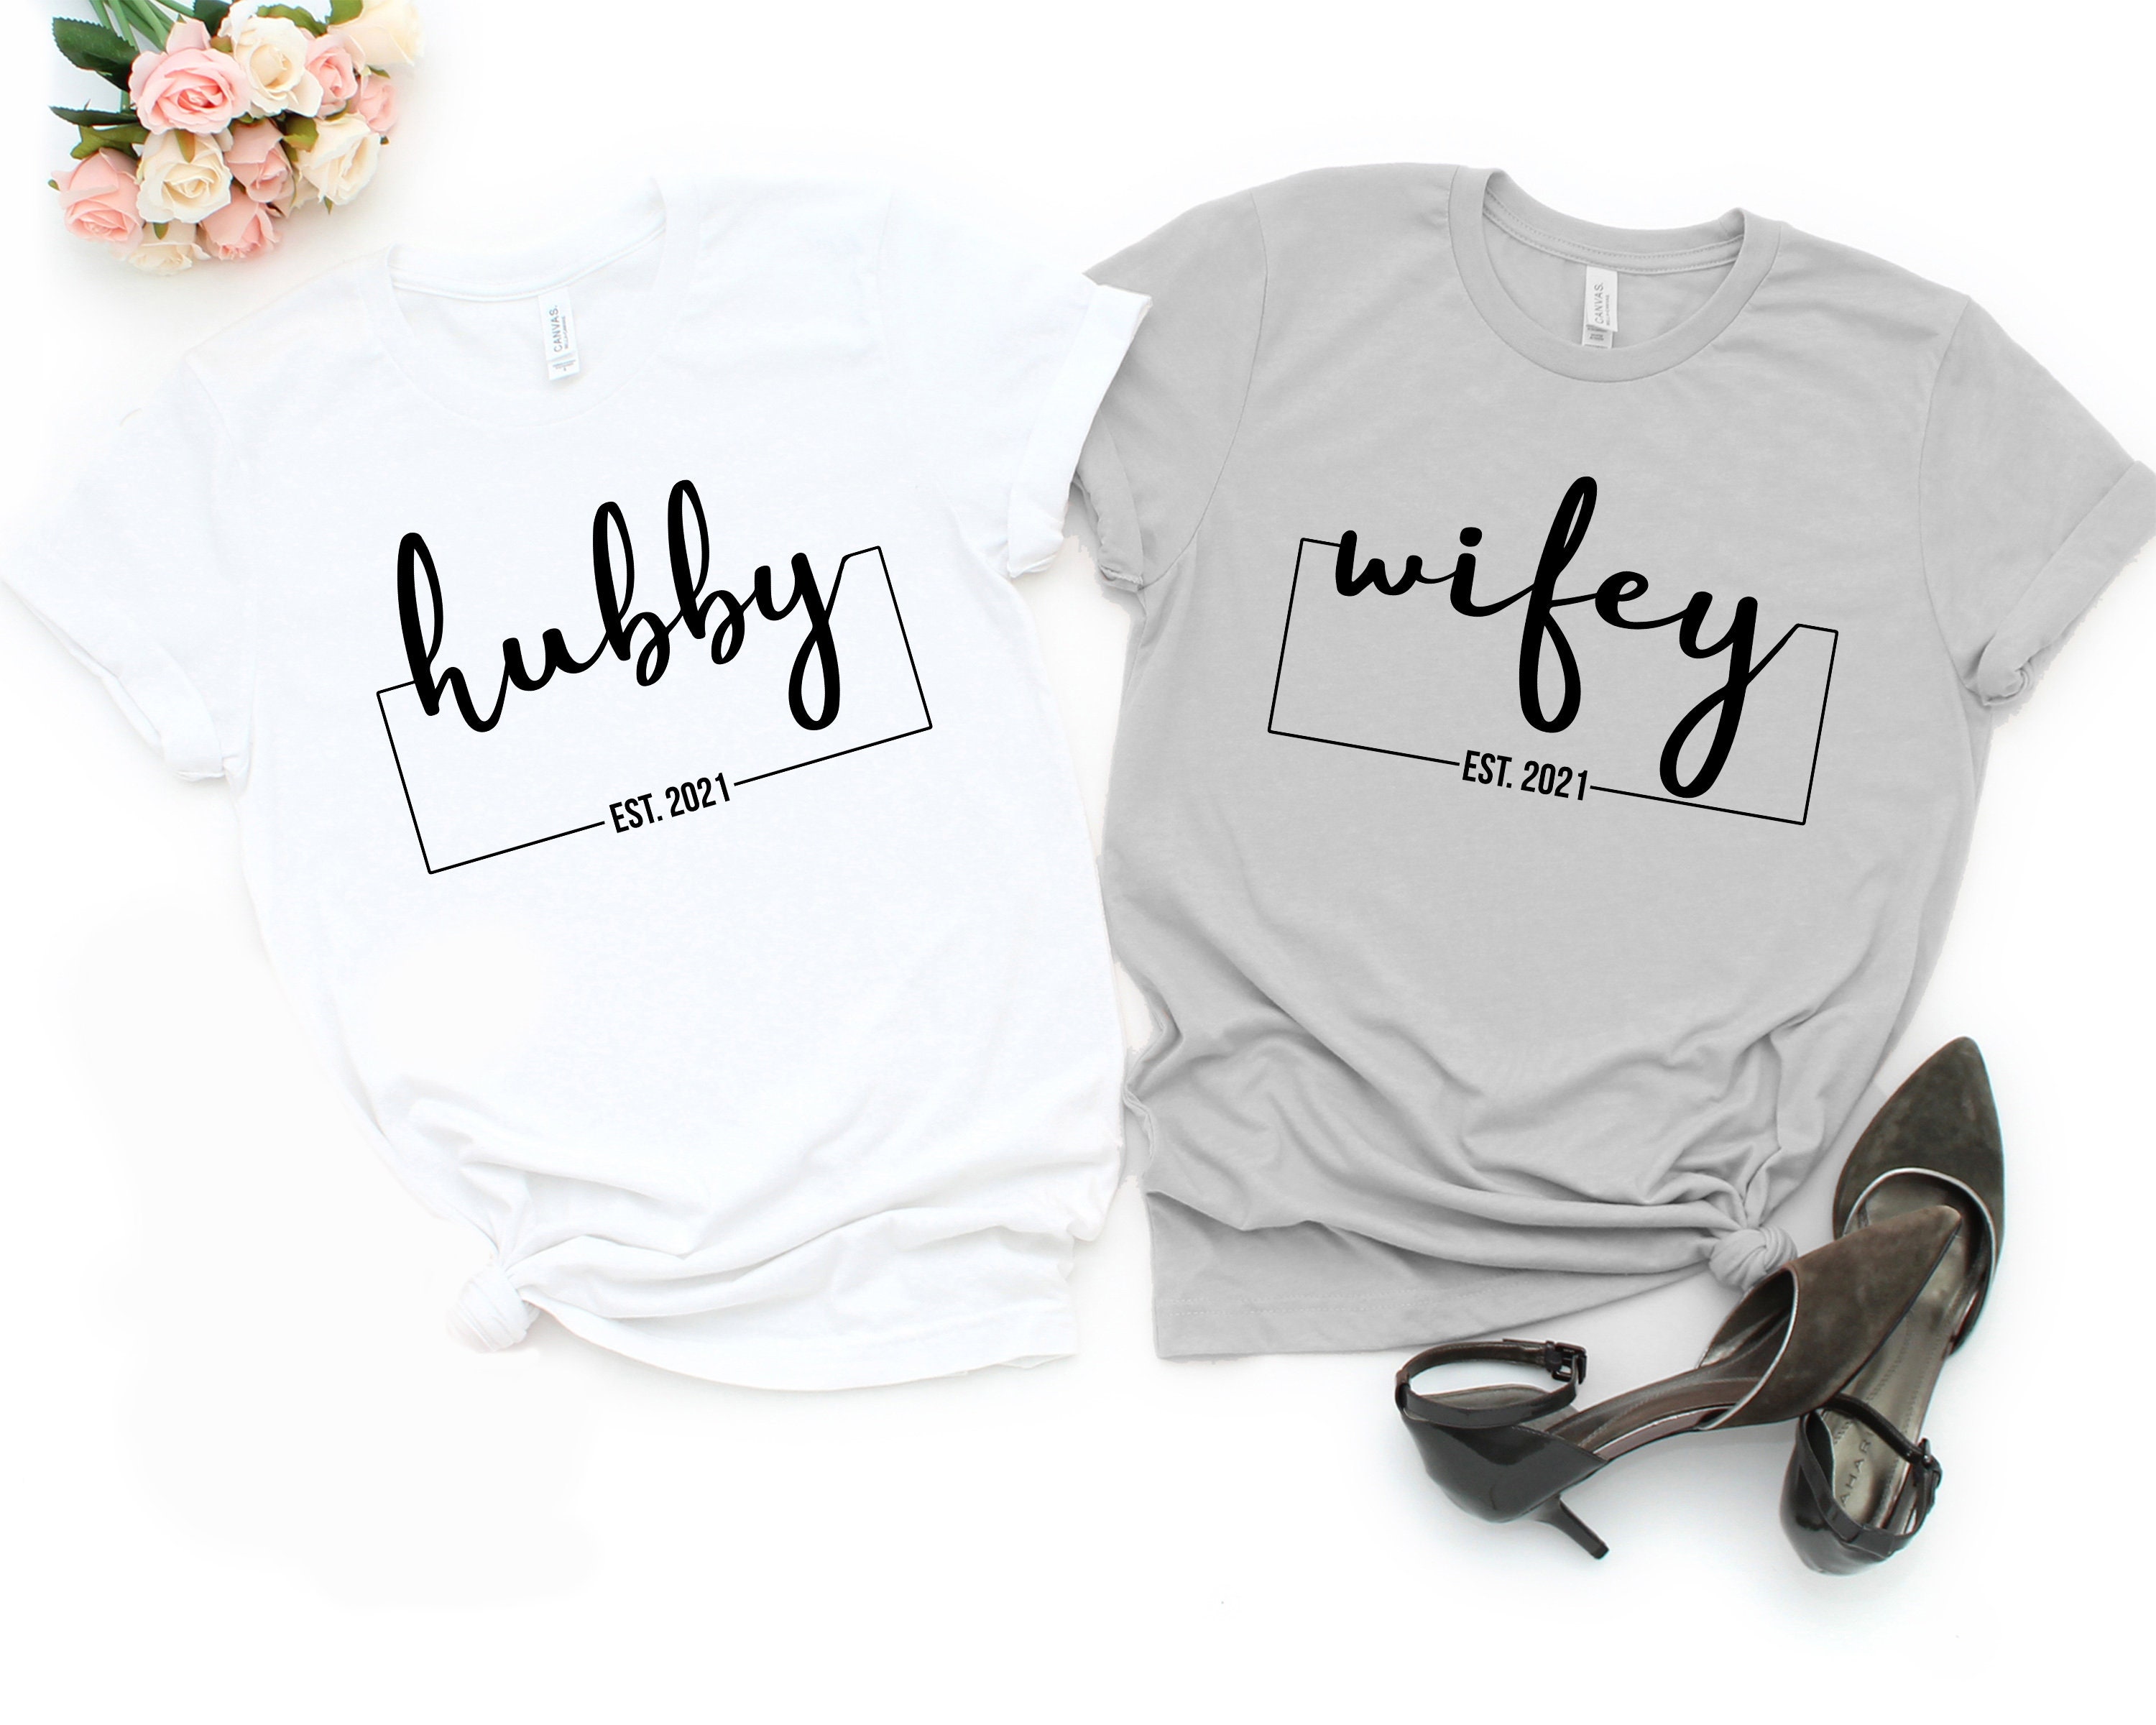 Wifey Hubby EST Date Shirts Couple Shirts Honeymoon Shirts | Etsy